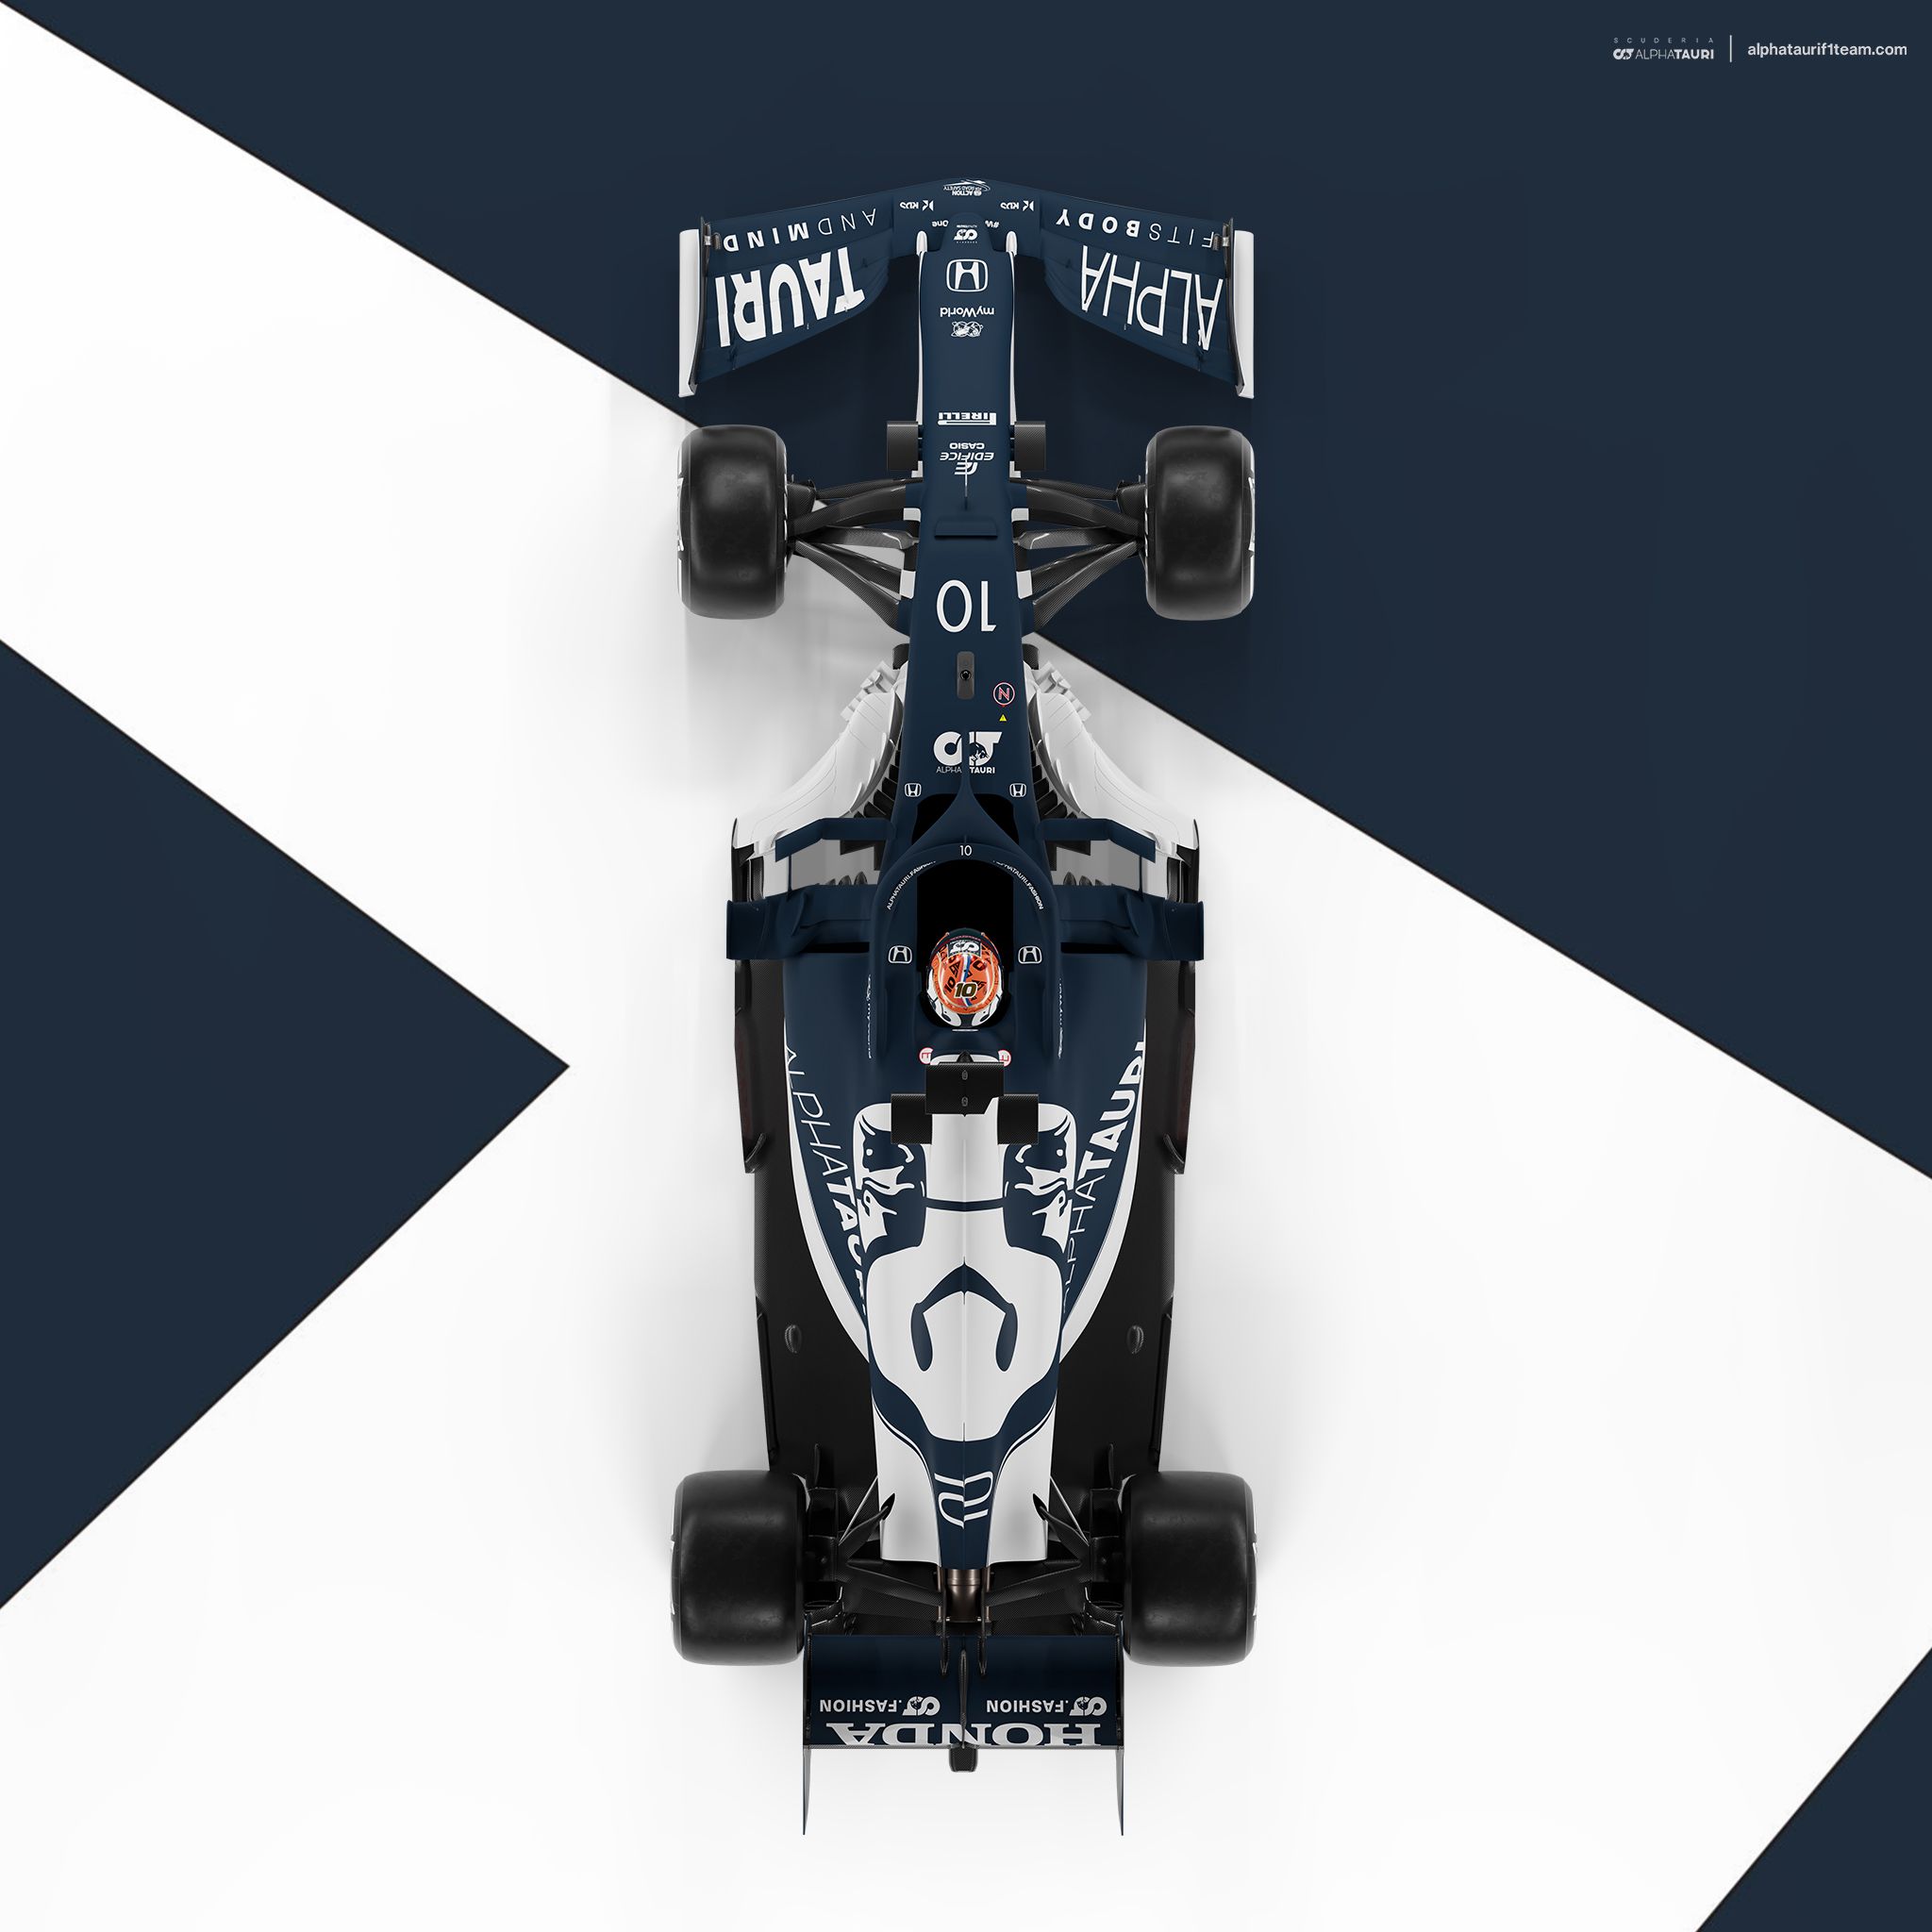 F1 Wallpaper Download